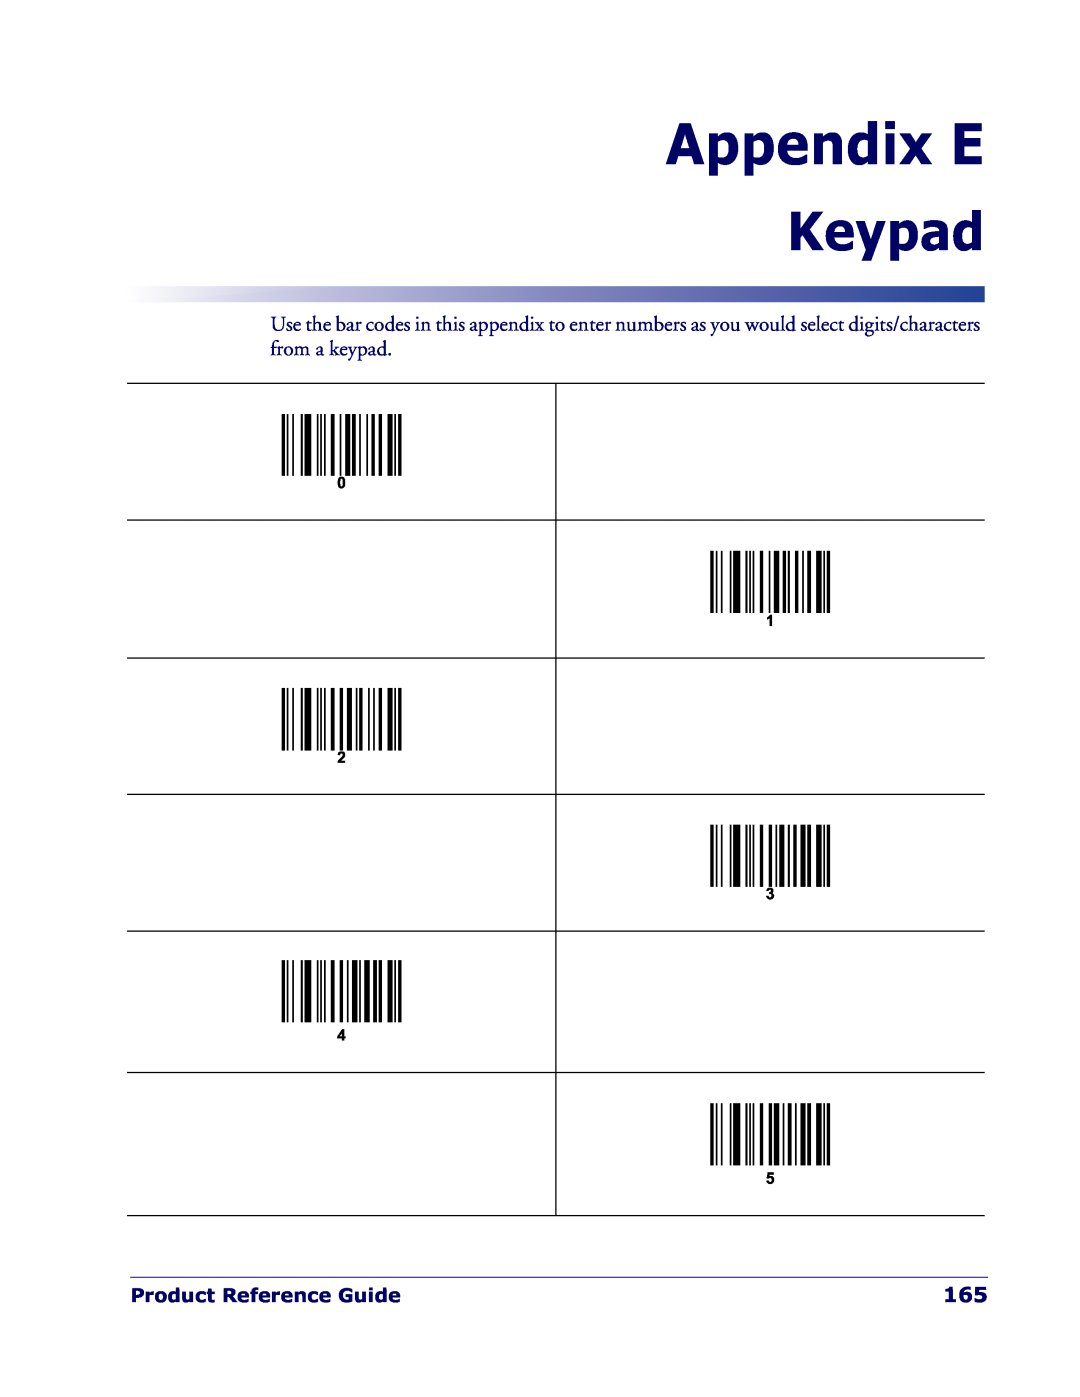 Datalogic Scanning QD 2300 manual Appendix E, Keypad, Product Reference Guide 